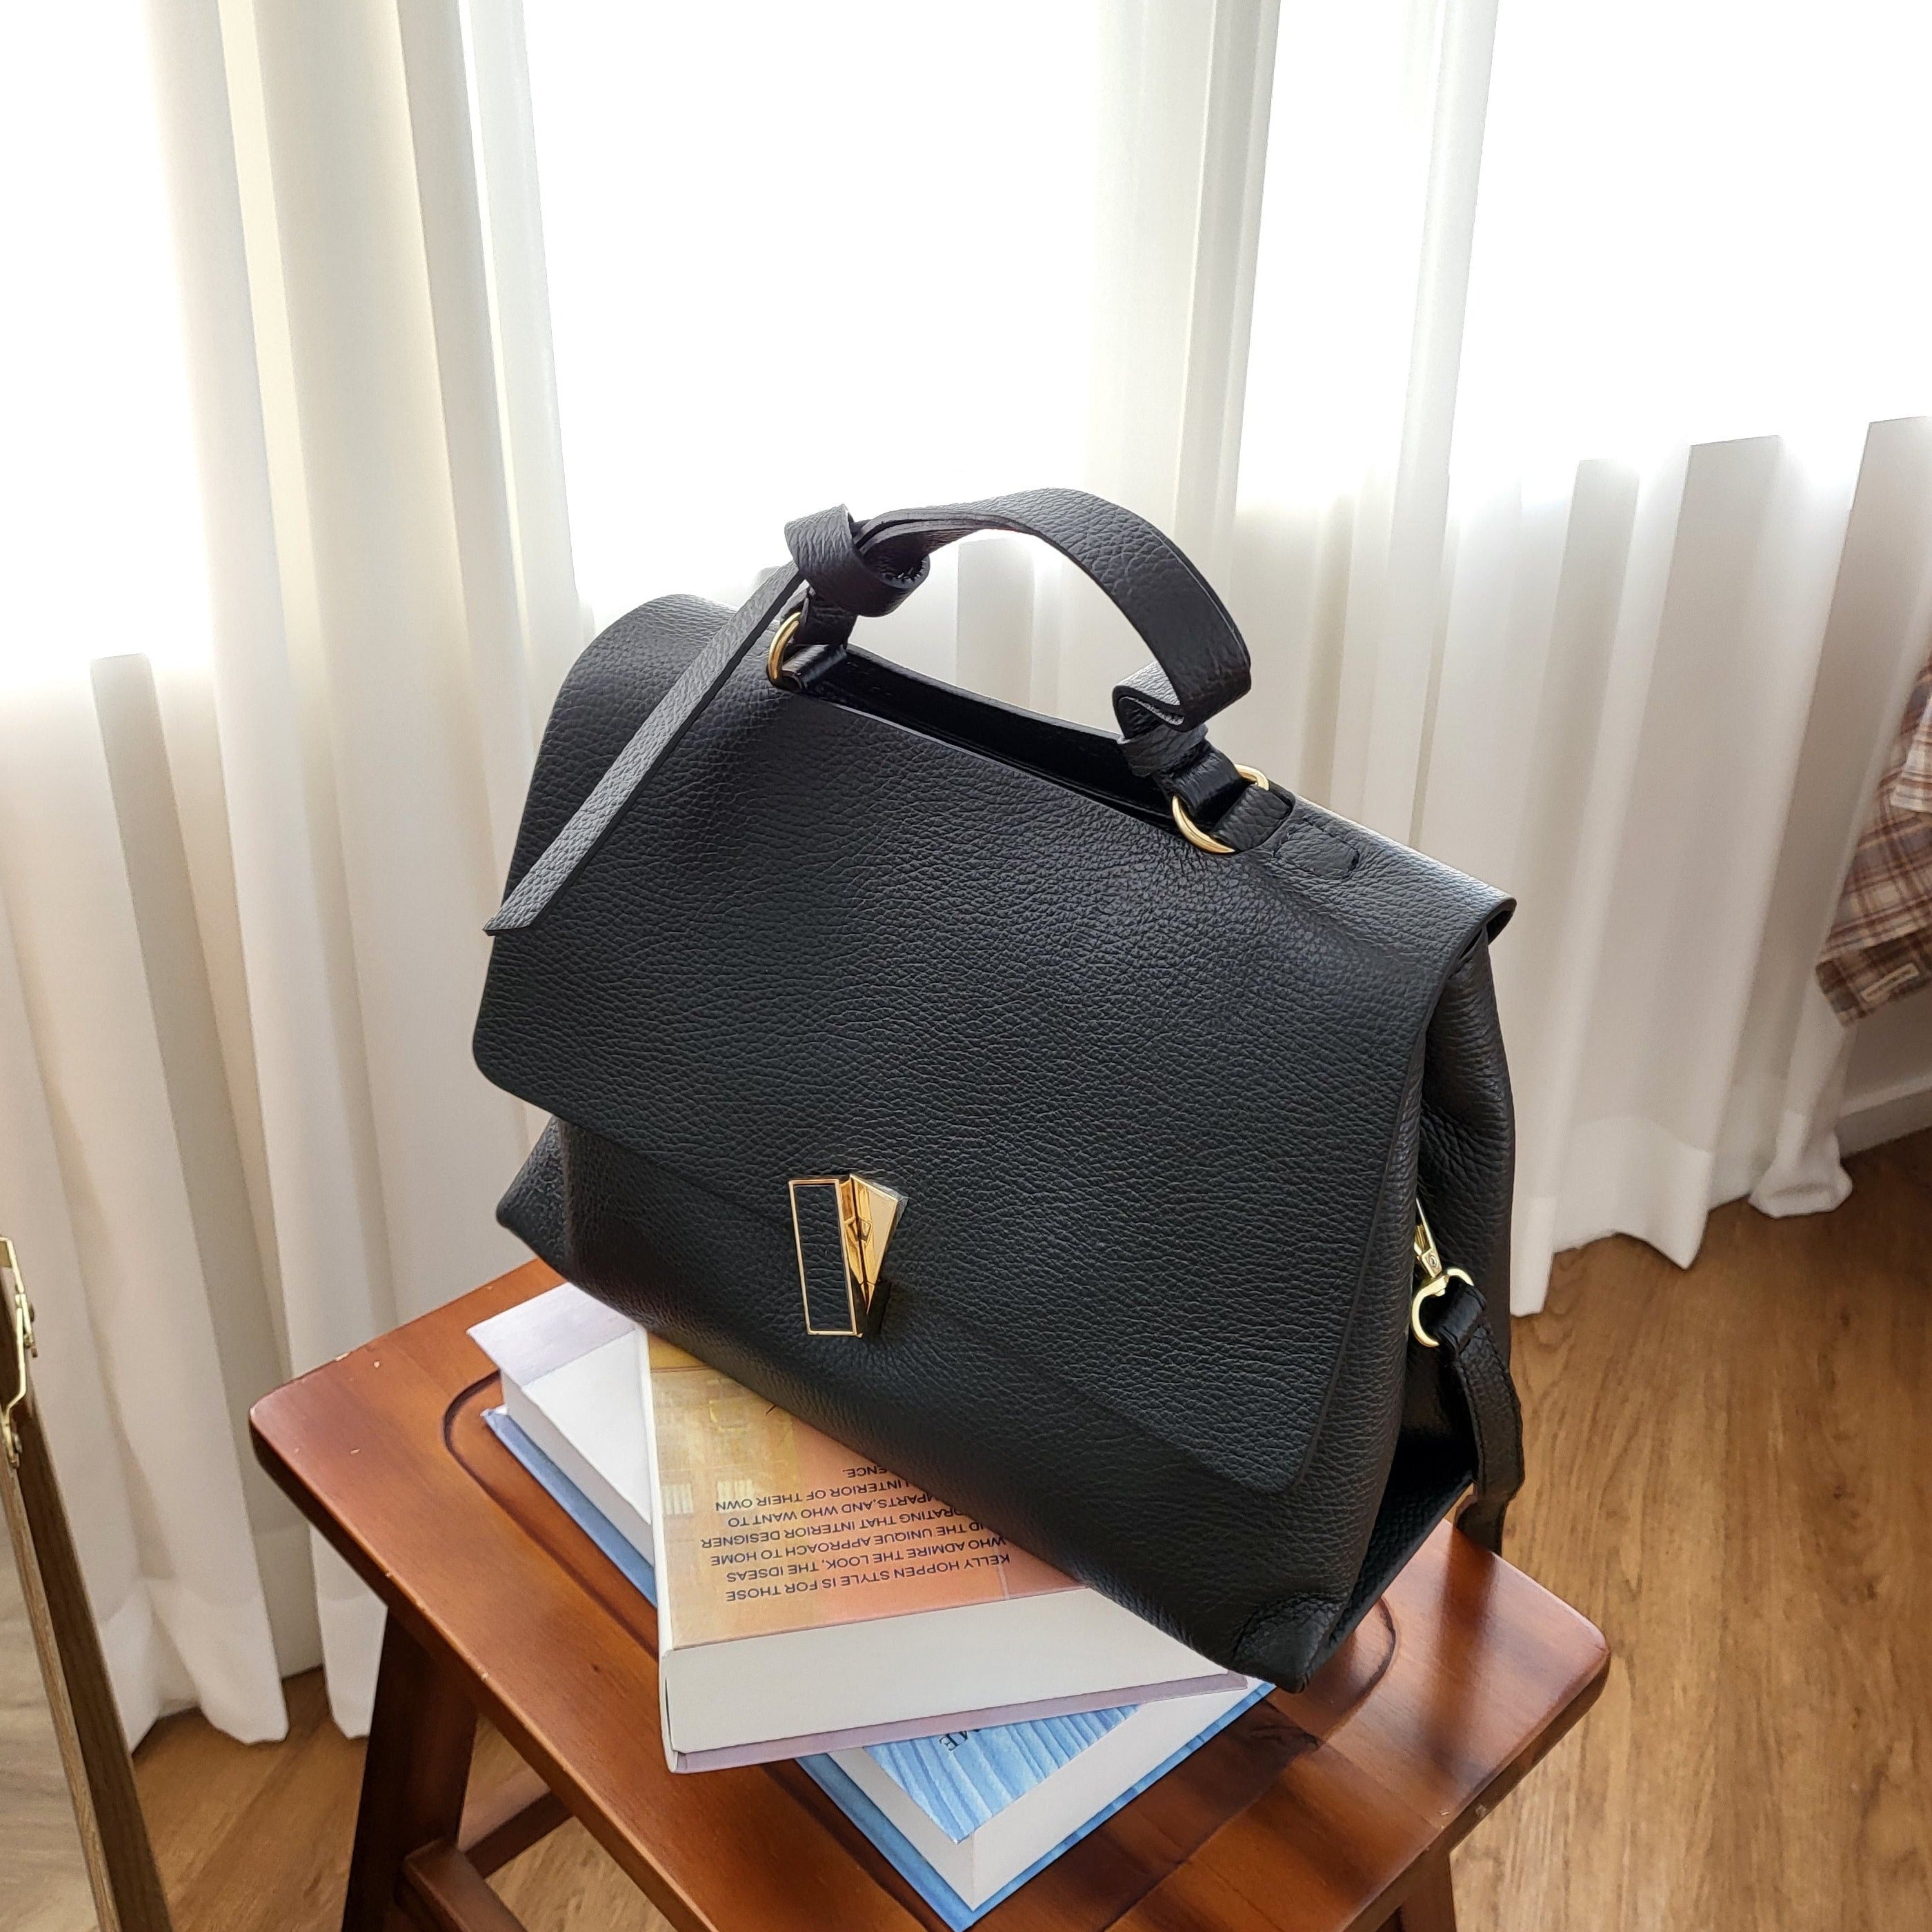 Luxury Italian Leather Handbags and Accessories